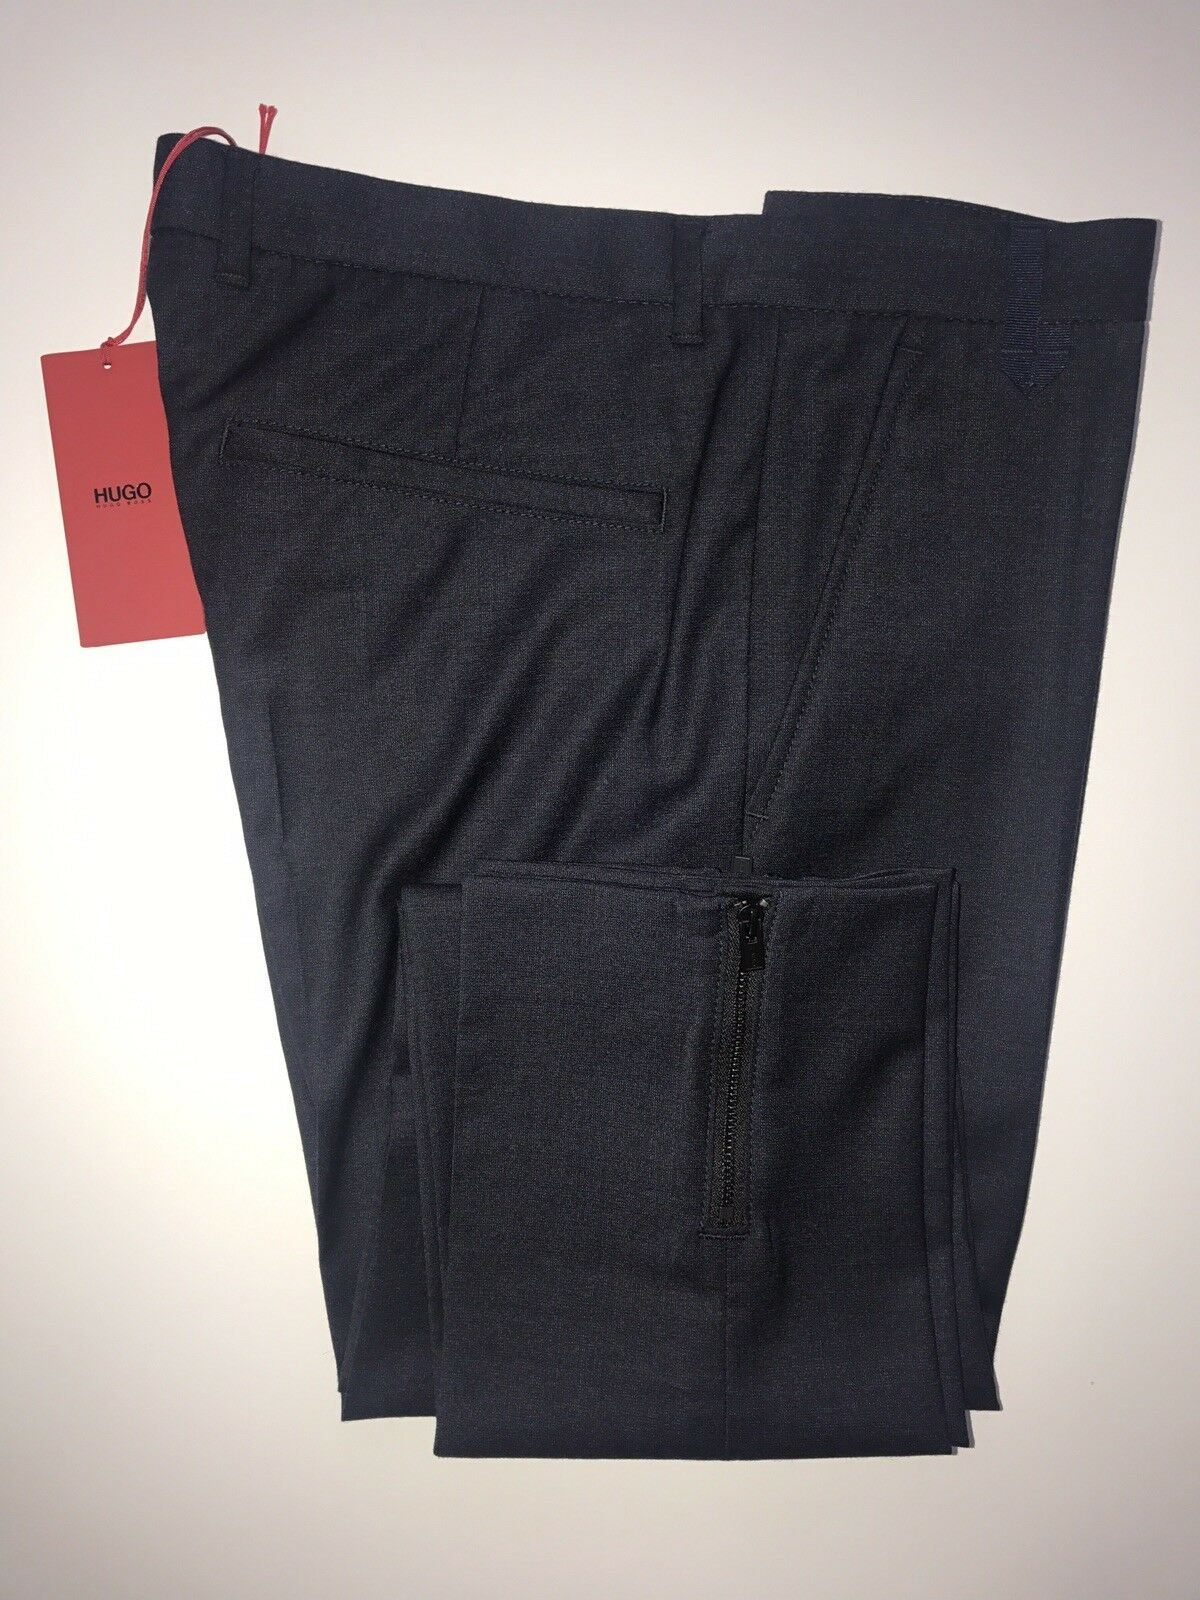 NWT $175 Boss Hugo Boss Hiw Mens Wool  Dark Blue Dress Pants Size 32R US